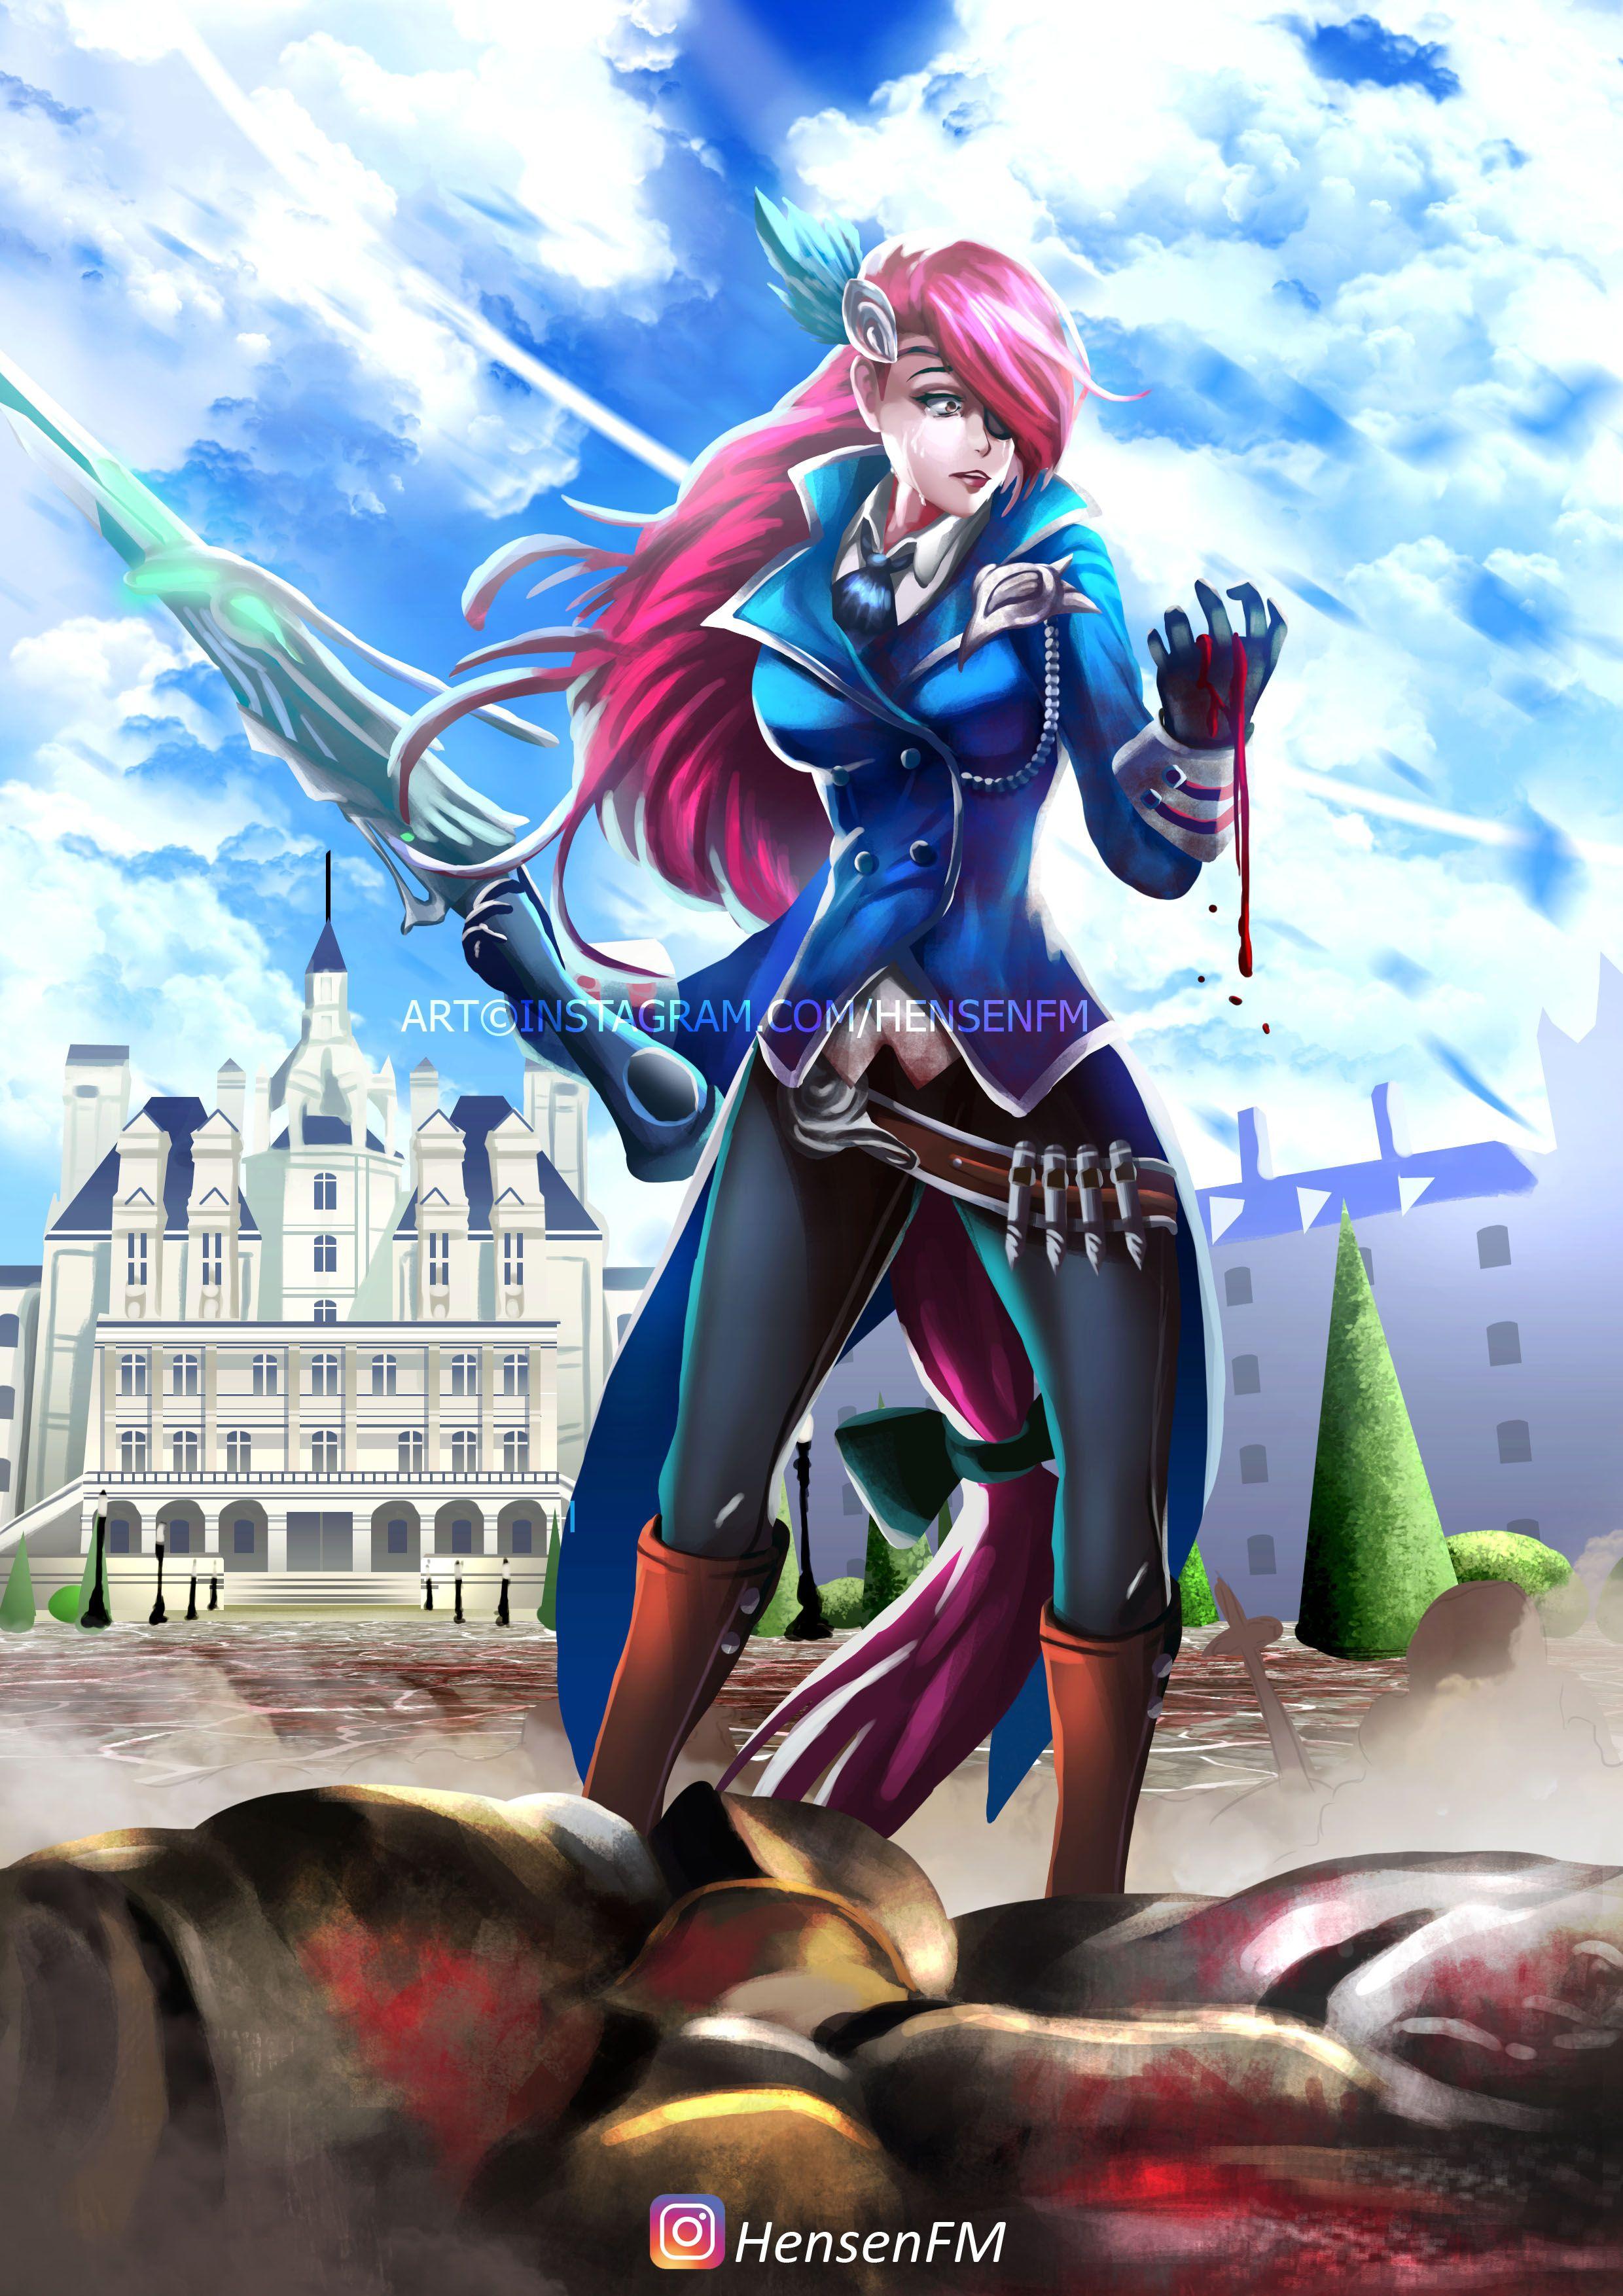 Gambar Anime Mobile Legends